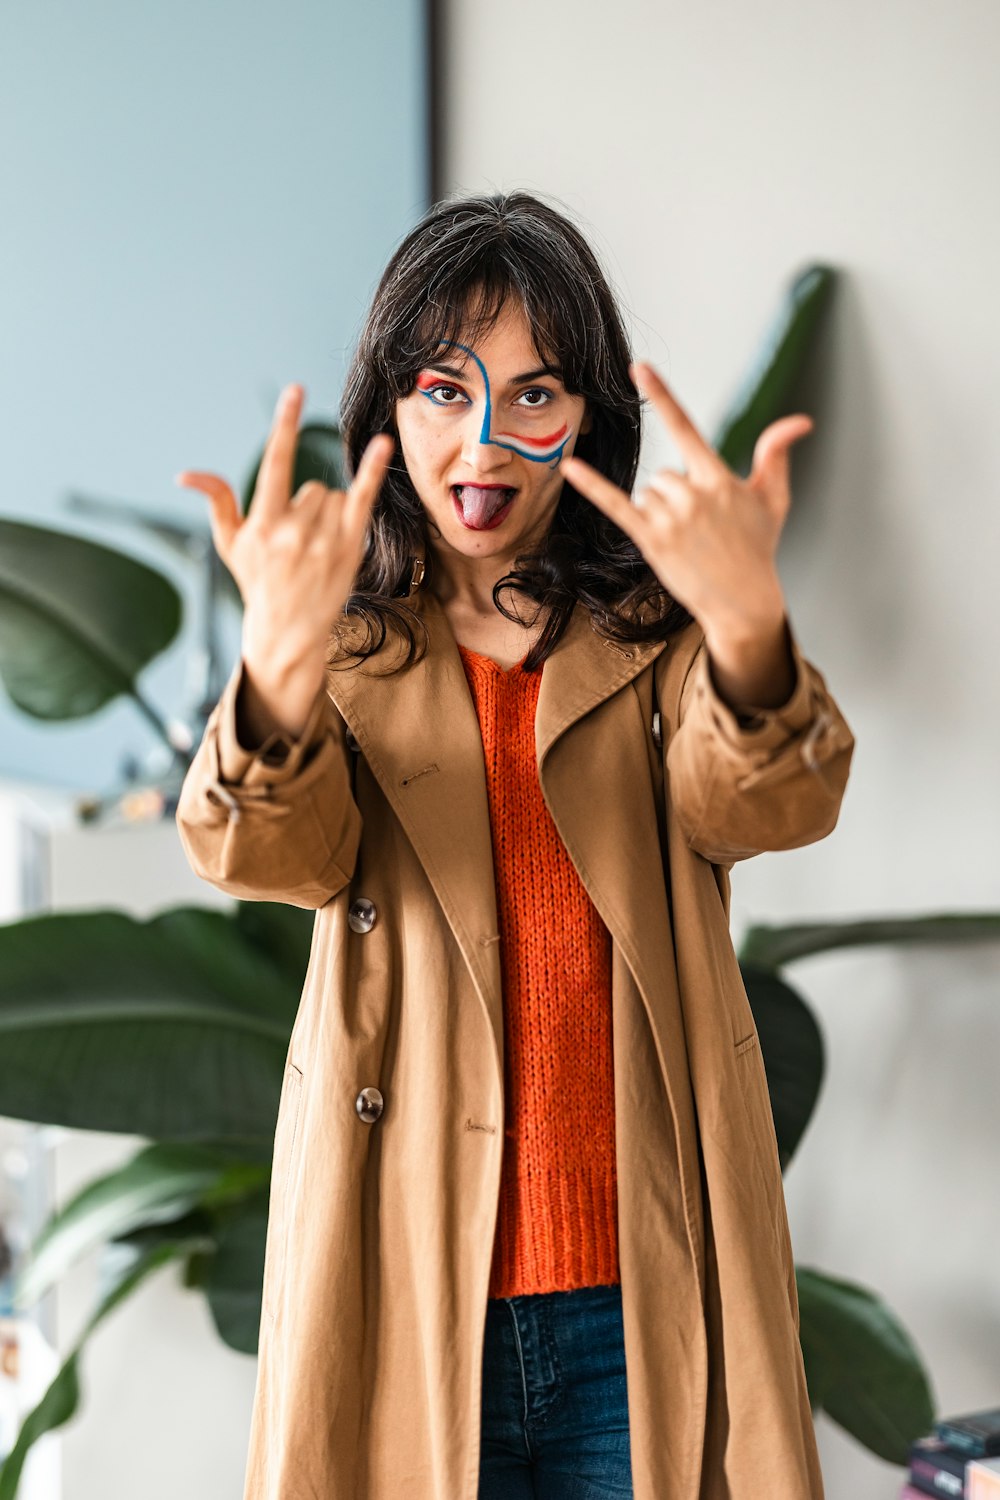 a woman making a weird face with her hands